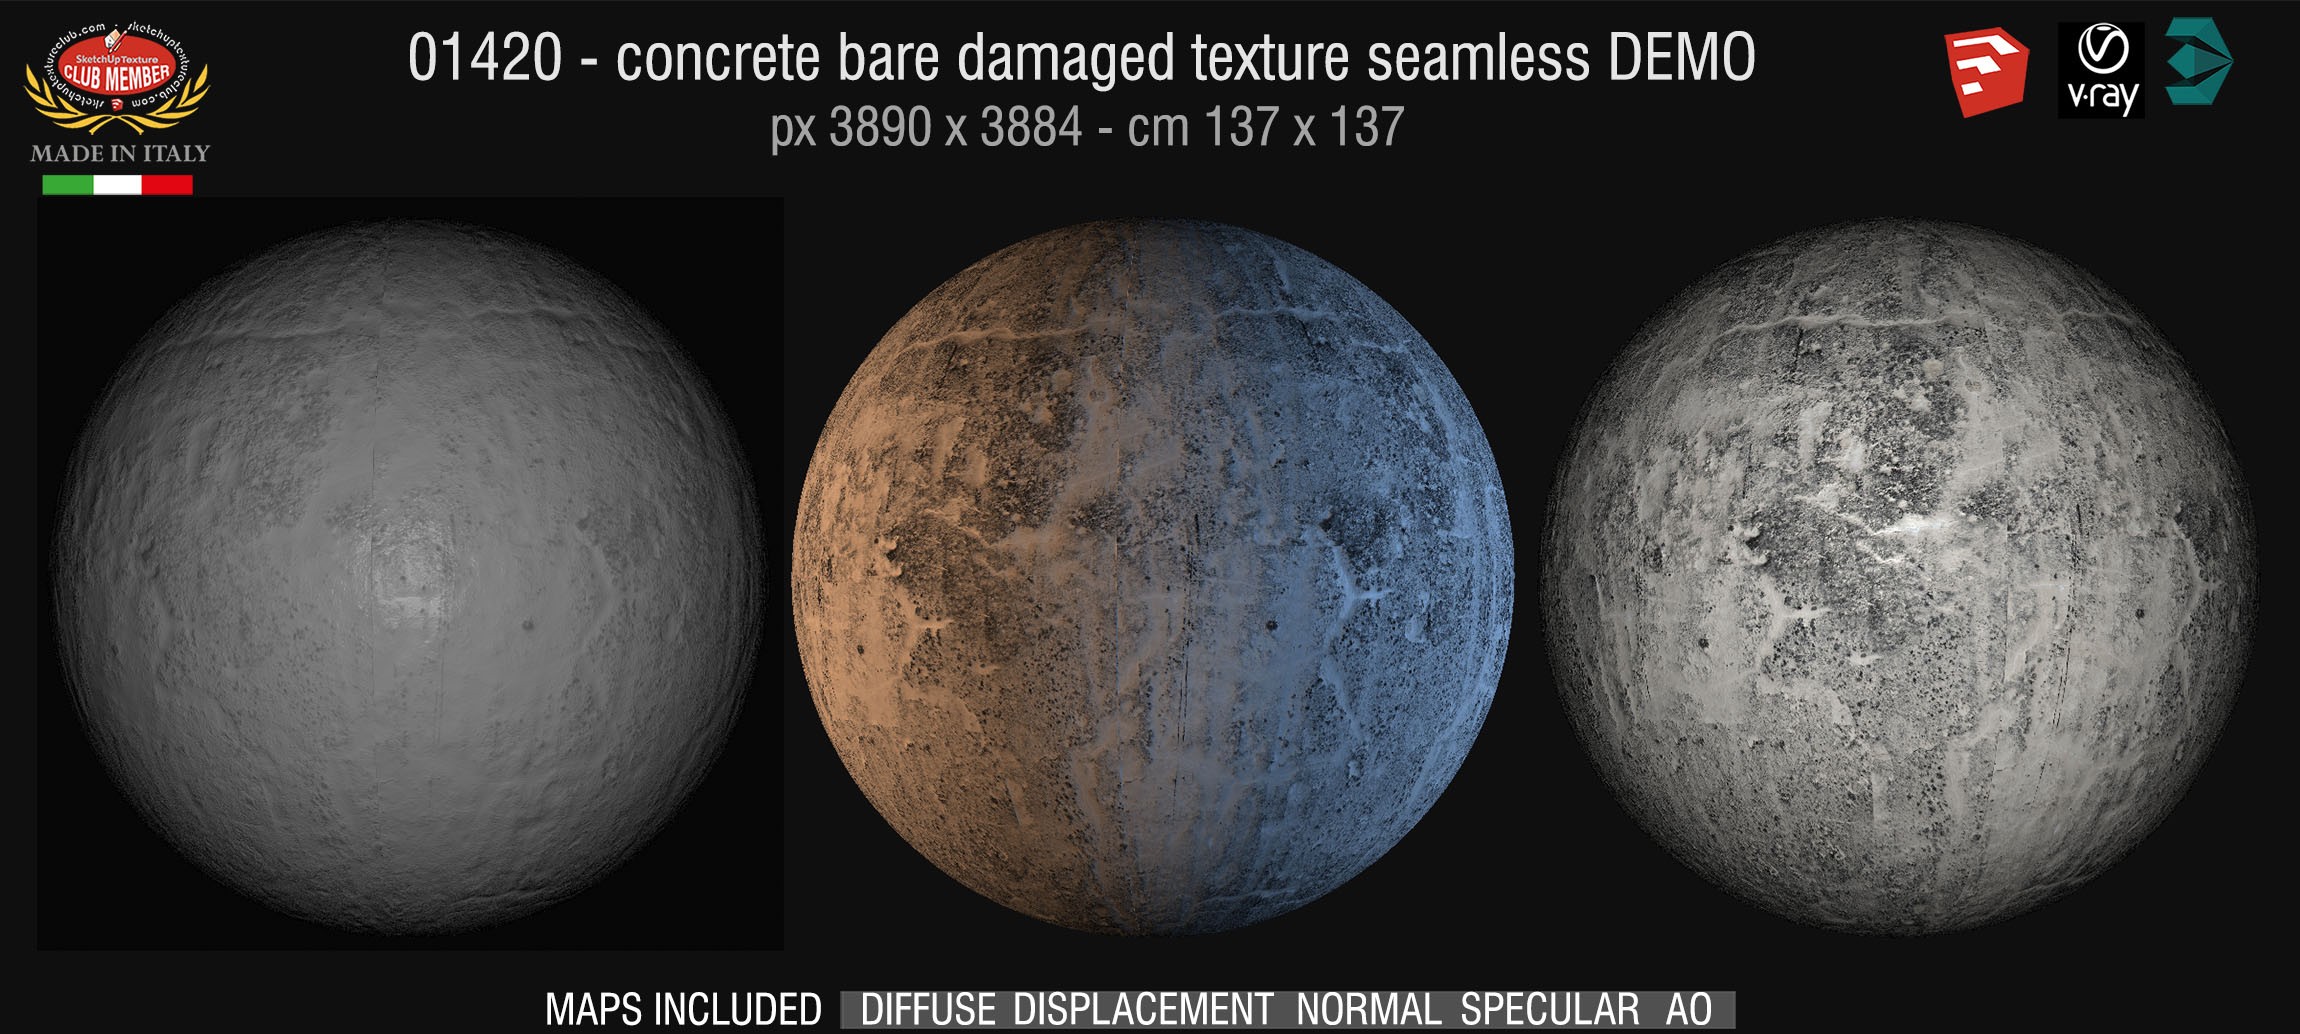 01420 HR Concrete bare damaged texture seamless + maps DEMO